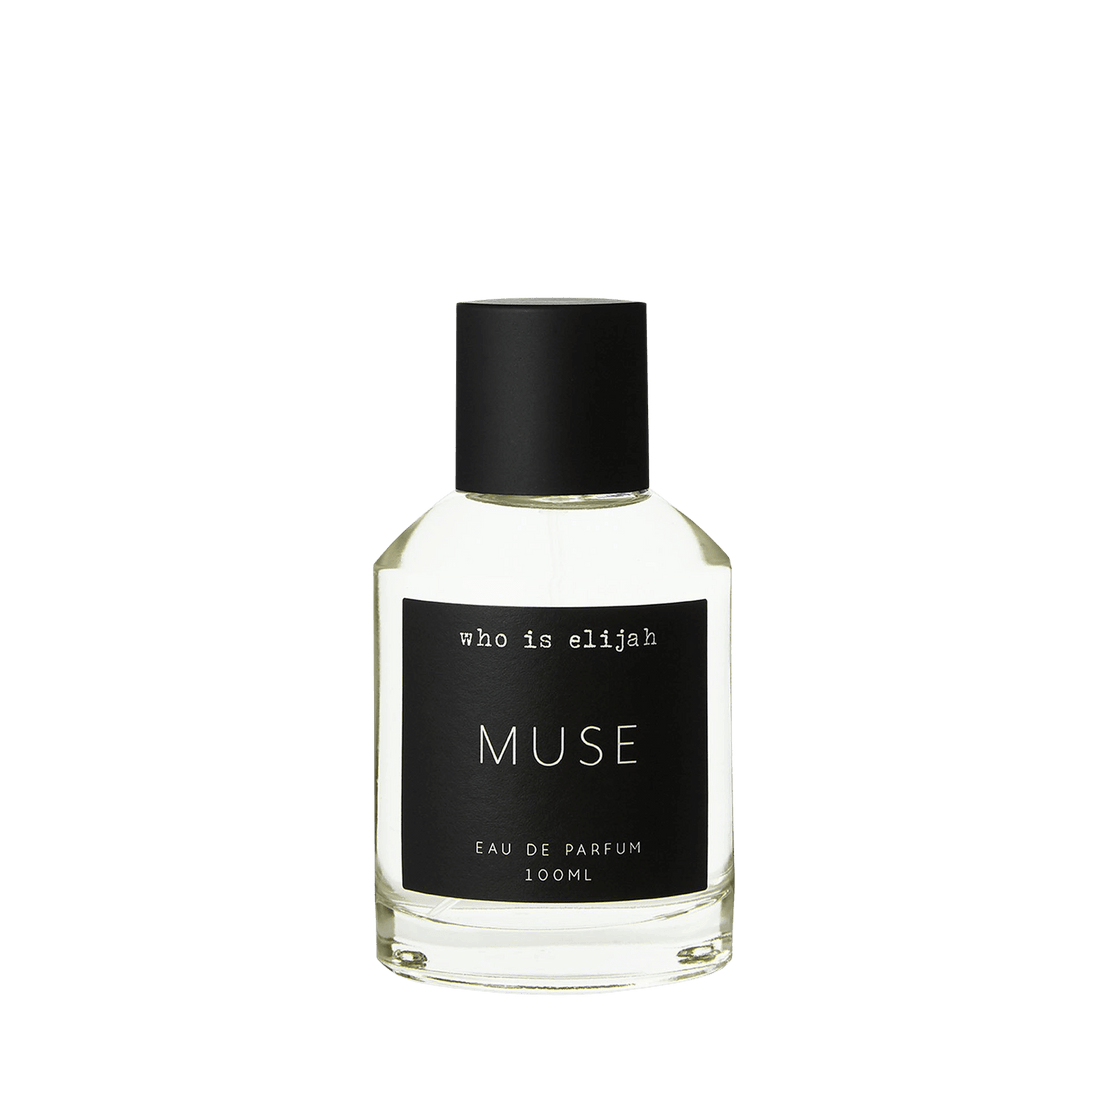 Muse Perfume 50ml